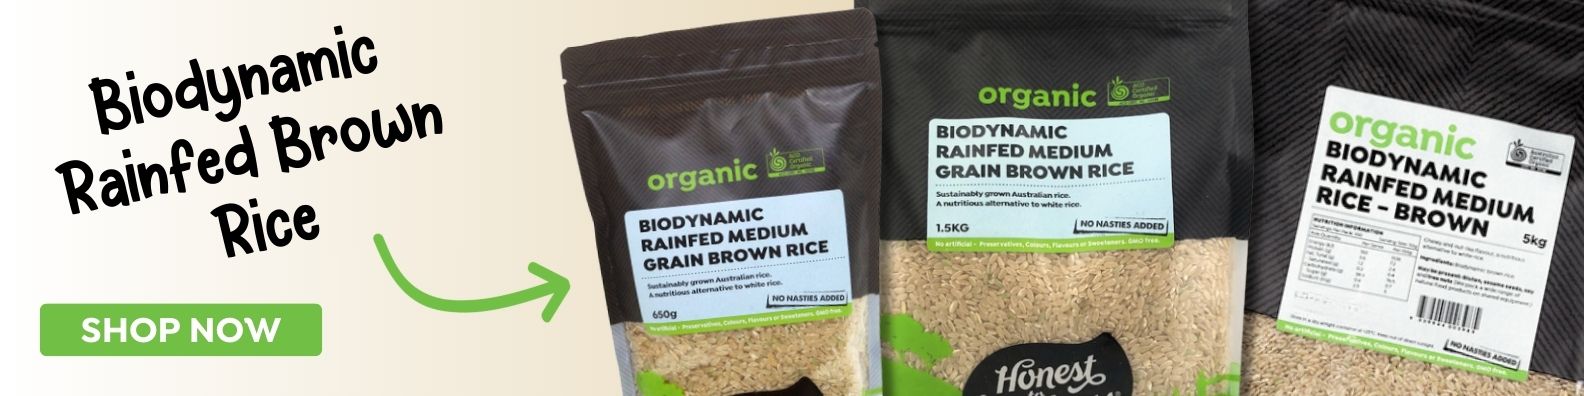 Biodynamic Rainfed Brown Rice